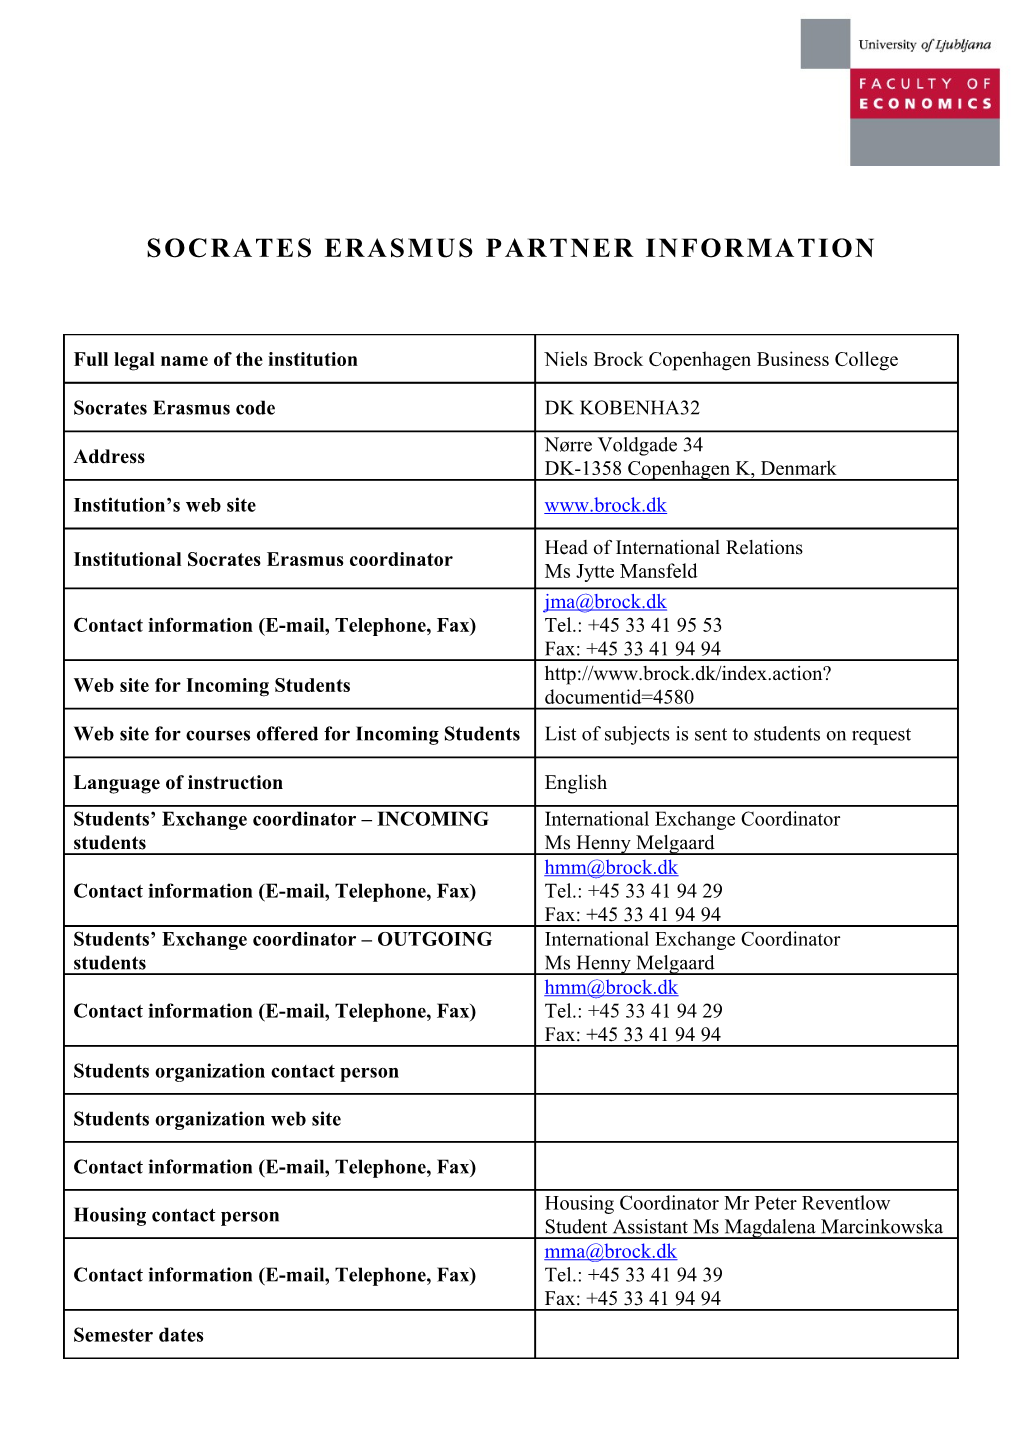 Socrates Erasmus Partner Information